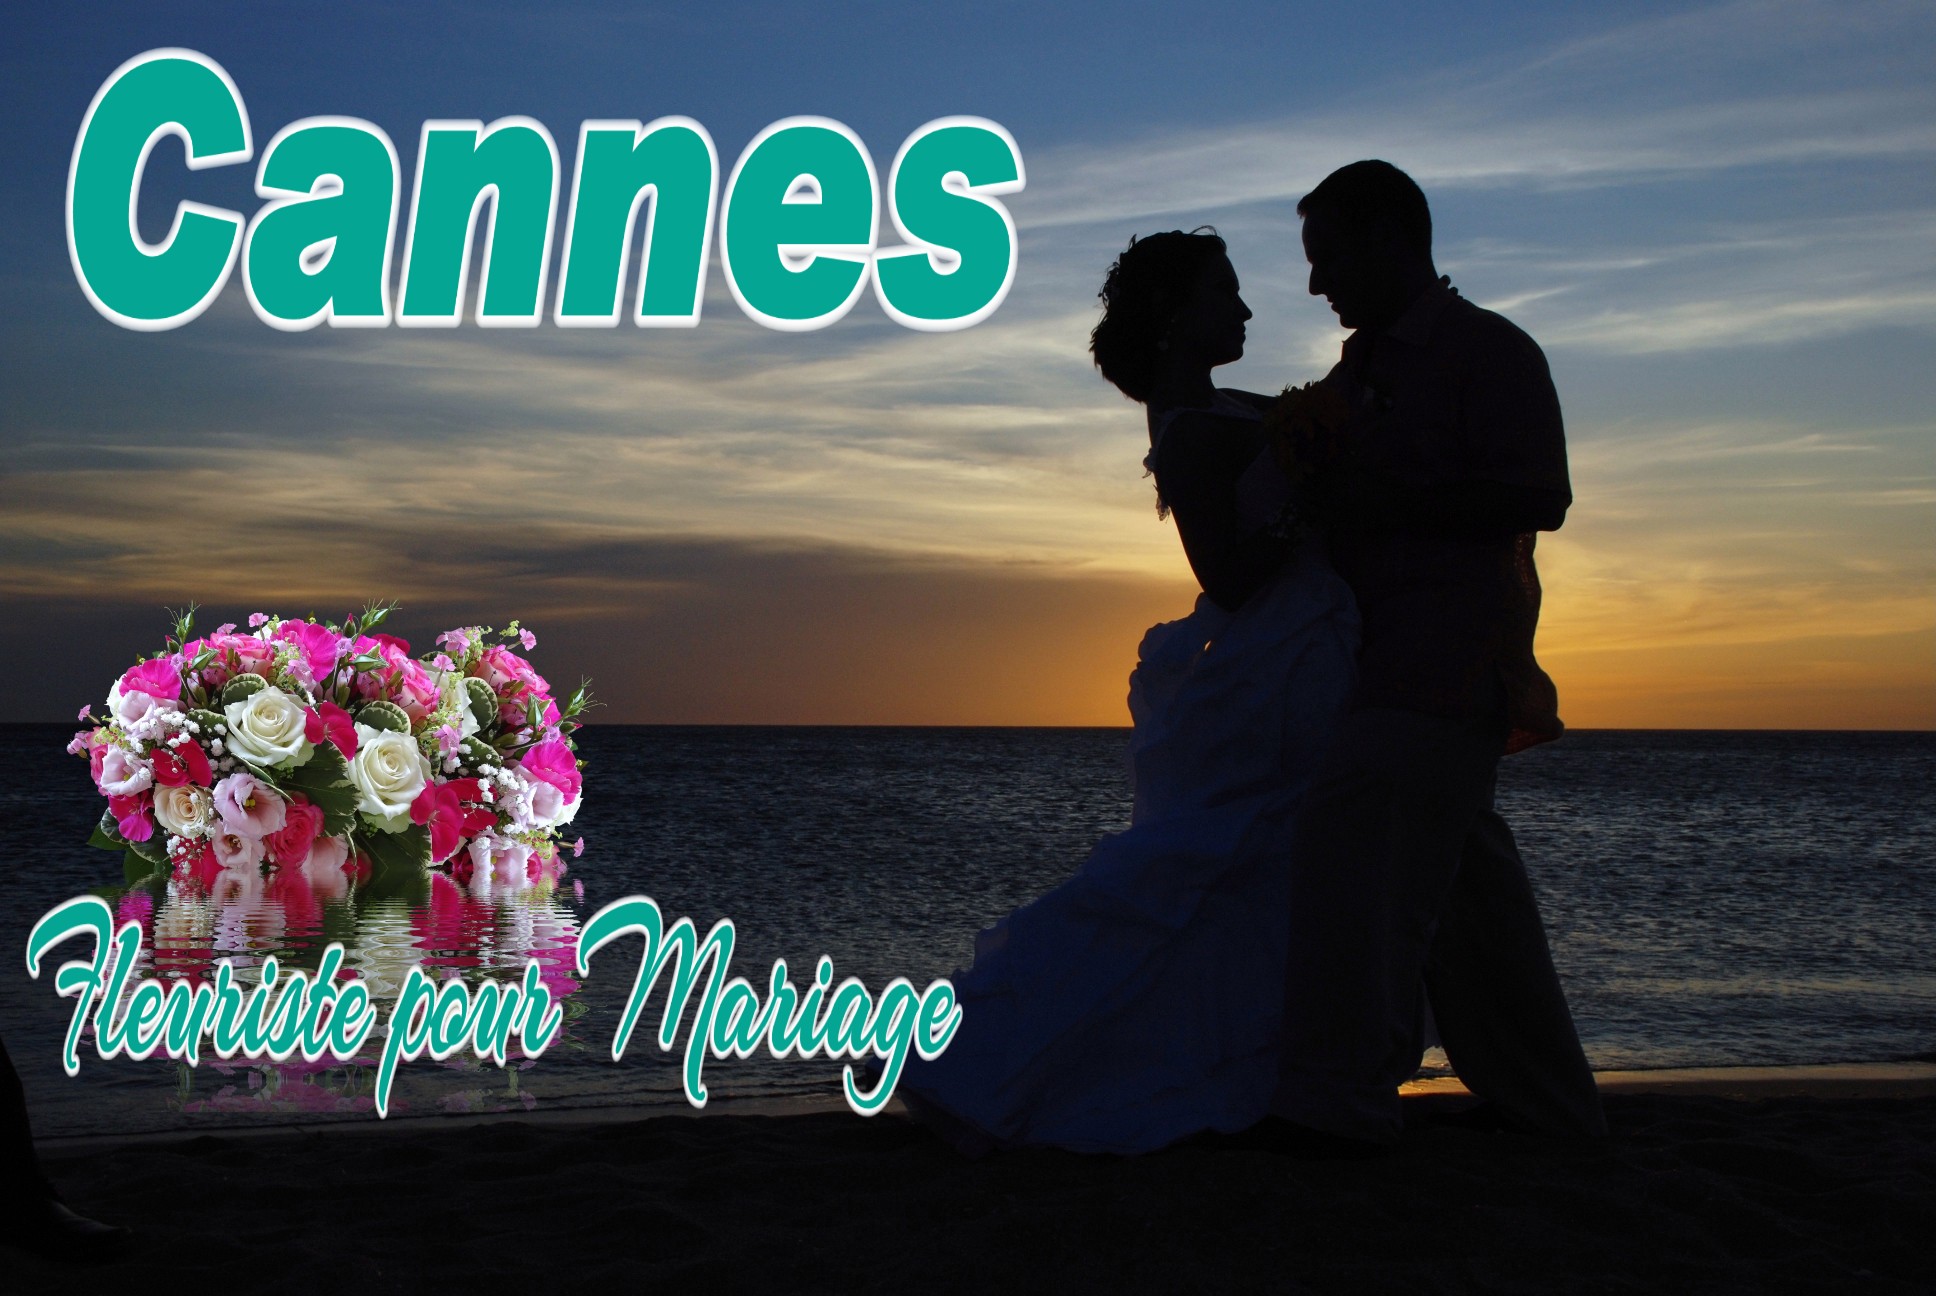 FLEURISTE MARIAGE CANNES - WEDDING FLOWERS CANNES